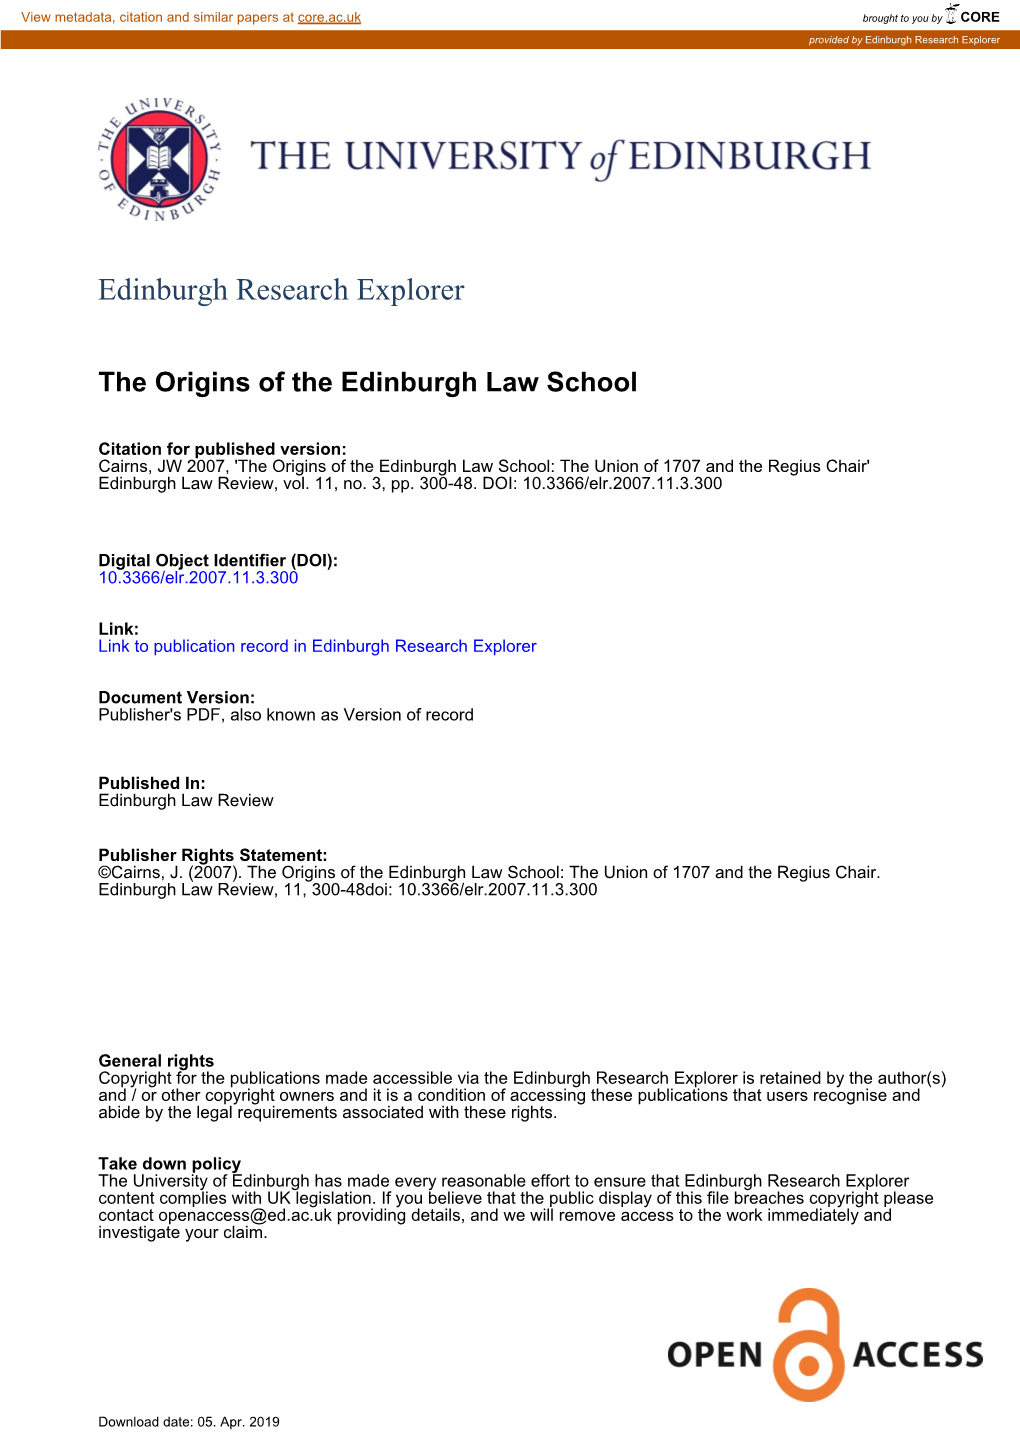 The Origins of the Edinburgh Law School